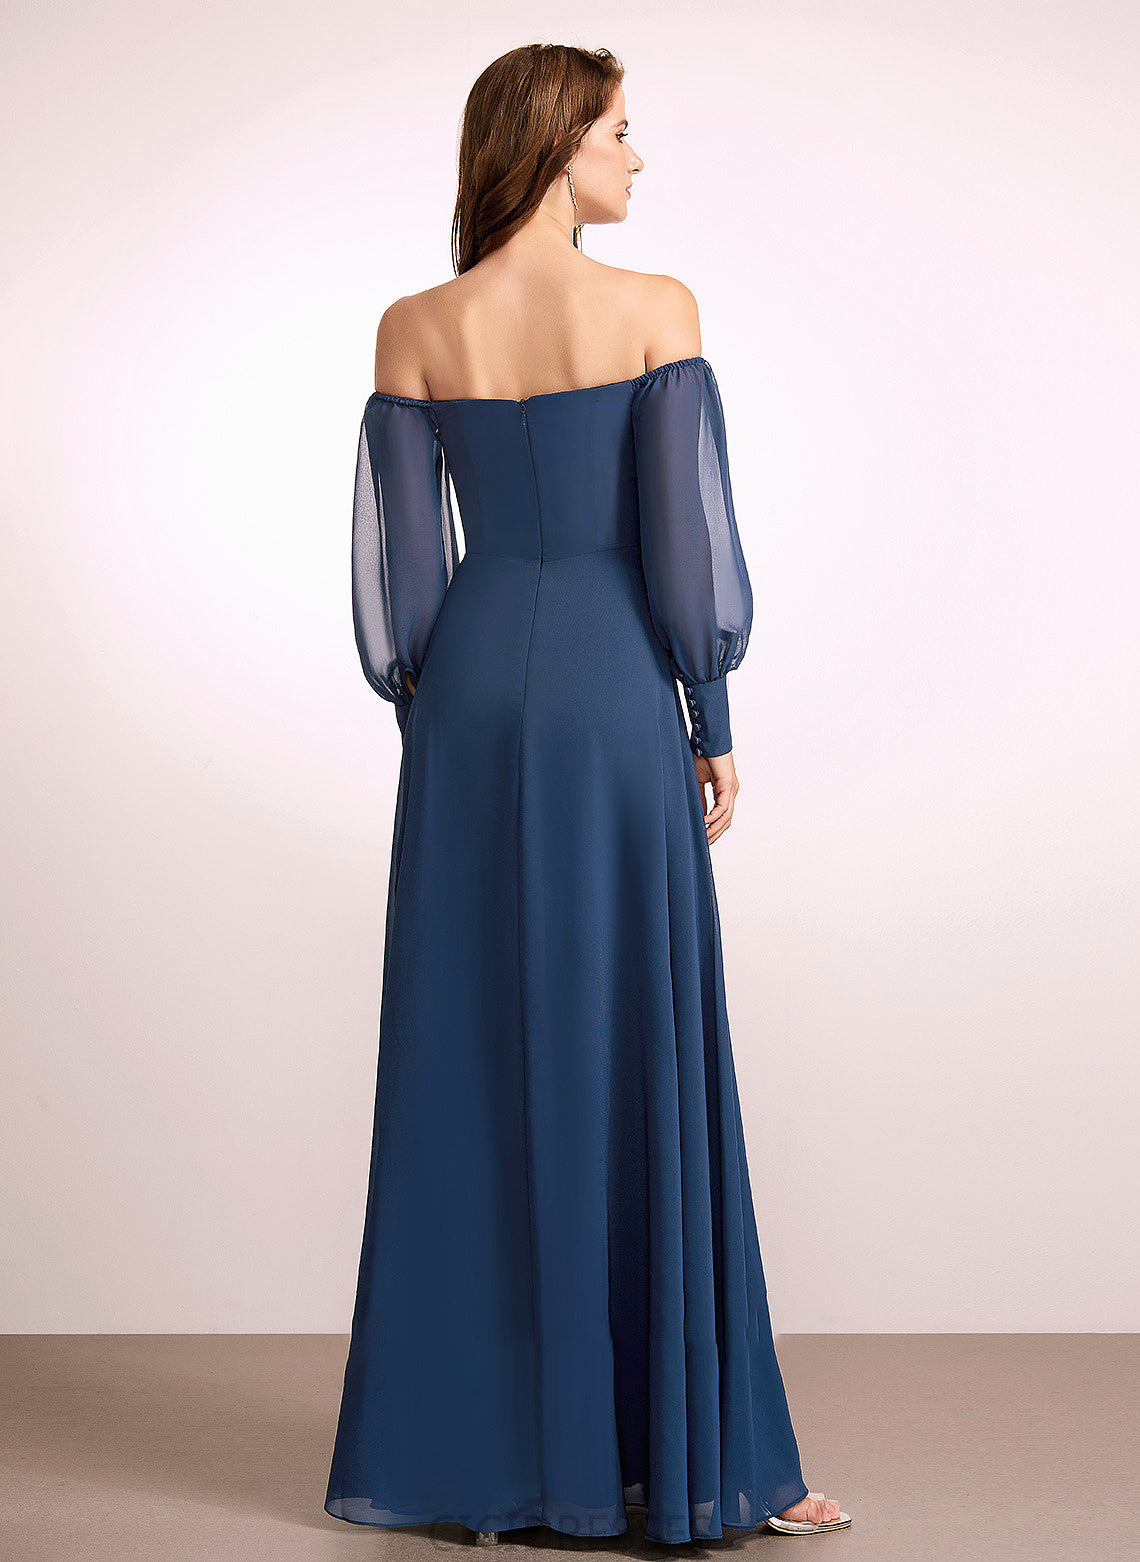 Embellishment Fabric Silhouette Neckline A-Line SplitFront Length Off-the-Shoulder Floor-Length Sierra Scoop A-Line/Princess Bridesmaid Dresses